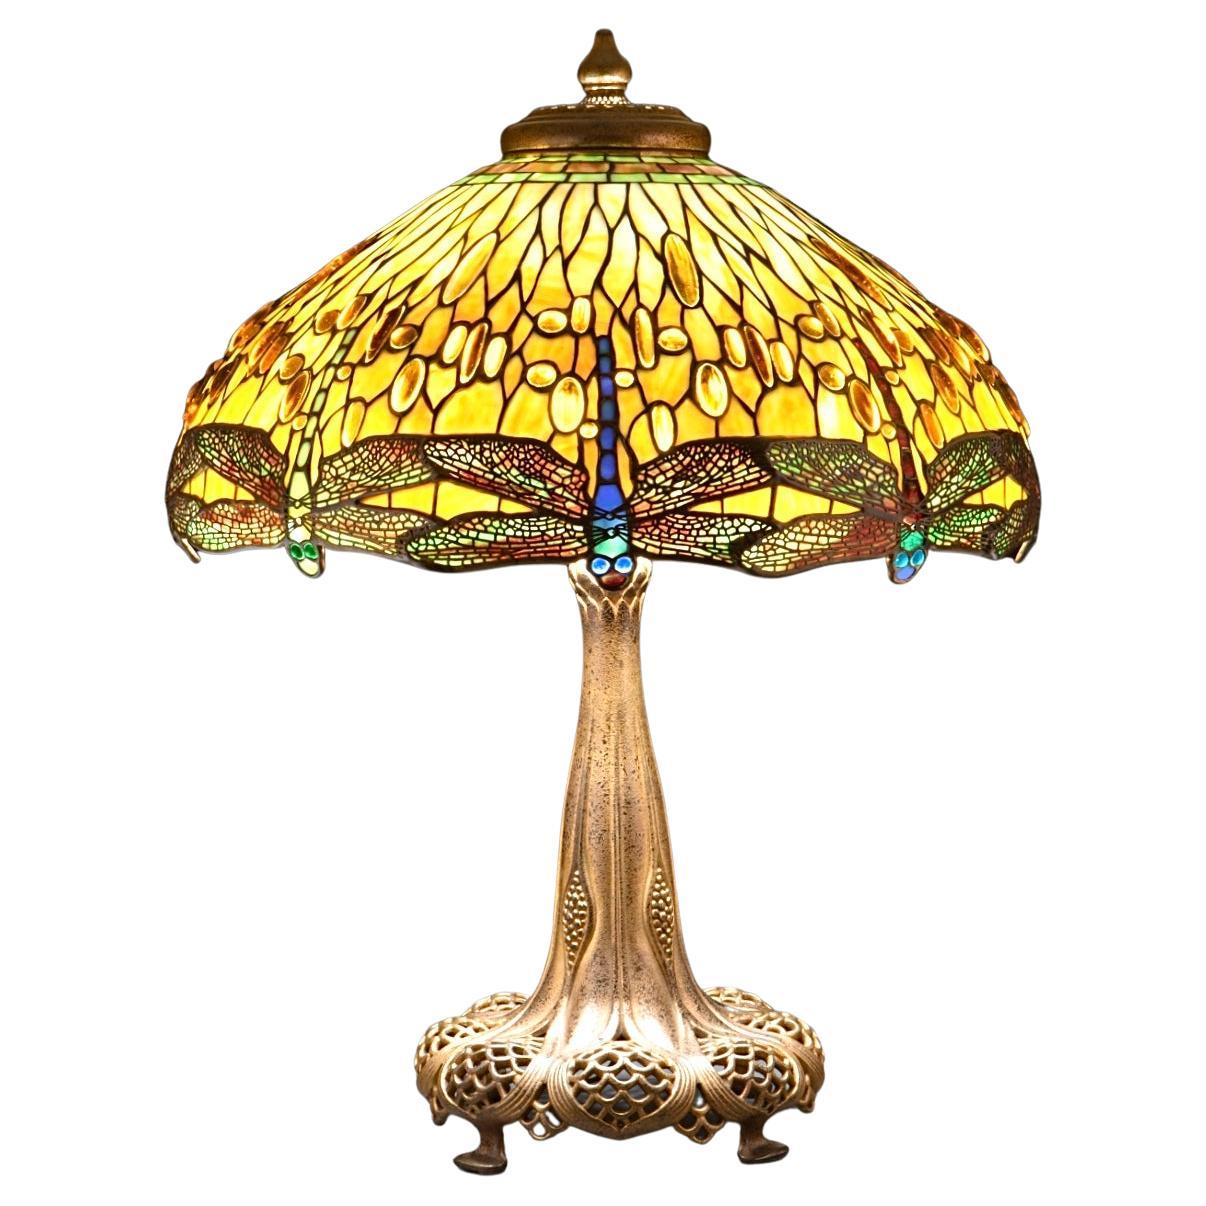 Tiffany Studios lampe de bureau libellule à tête de dragon ornée de bijoux en vente